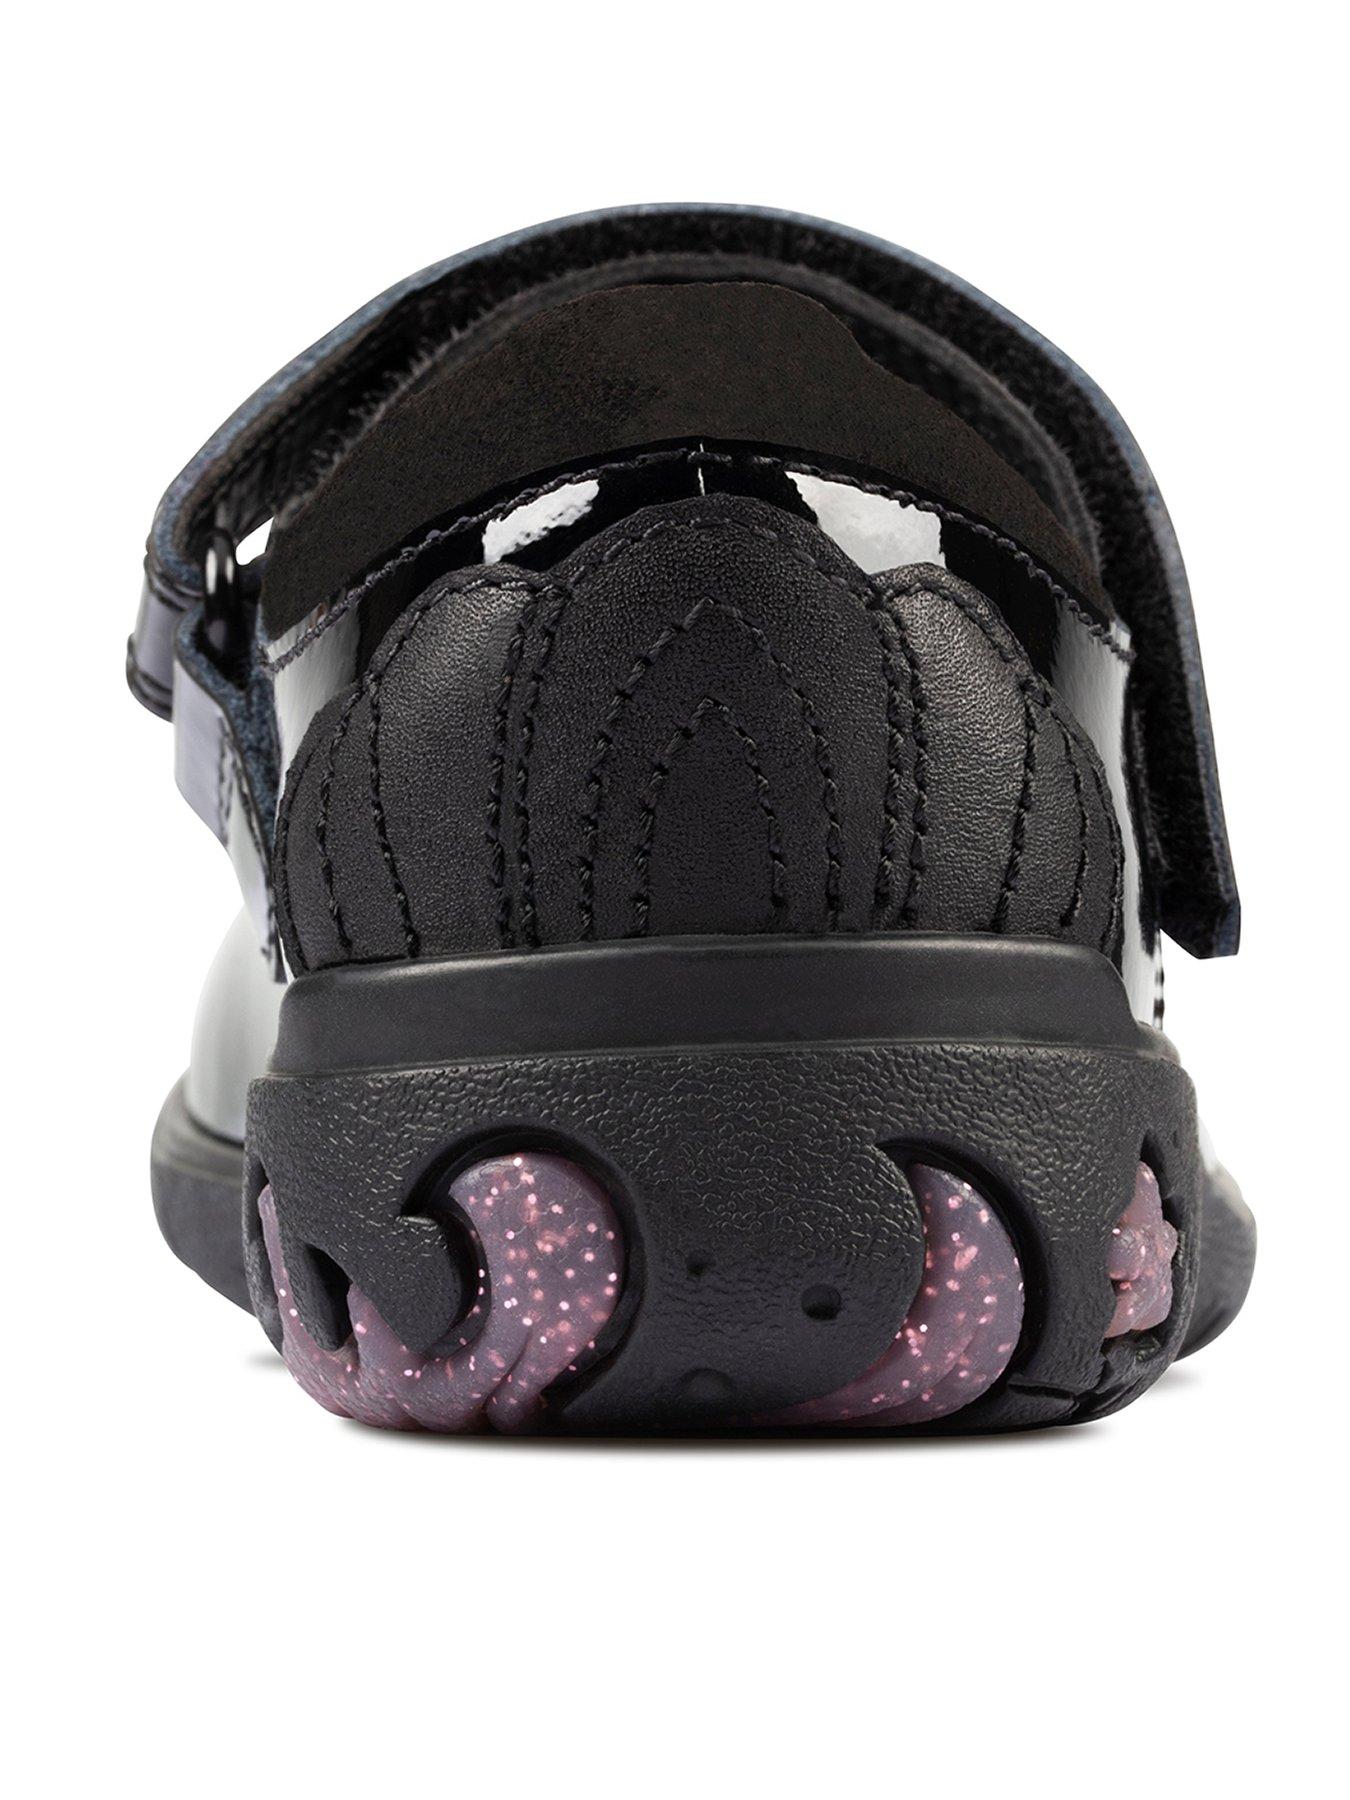  Toddler Sea Shimmer Mary Jane School Shoe - Black Patent